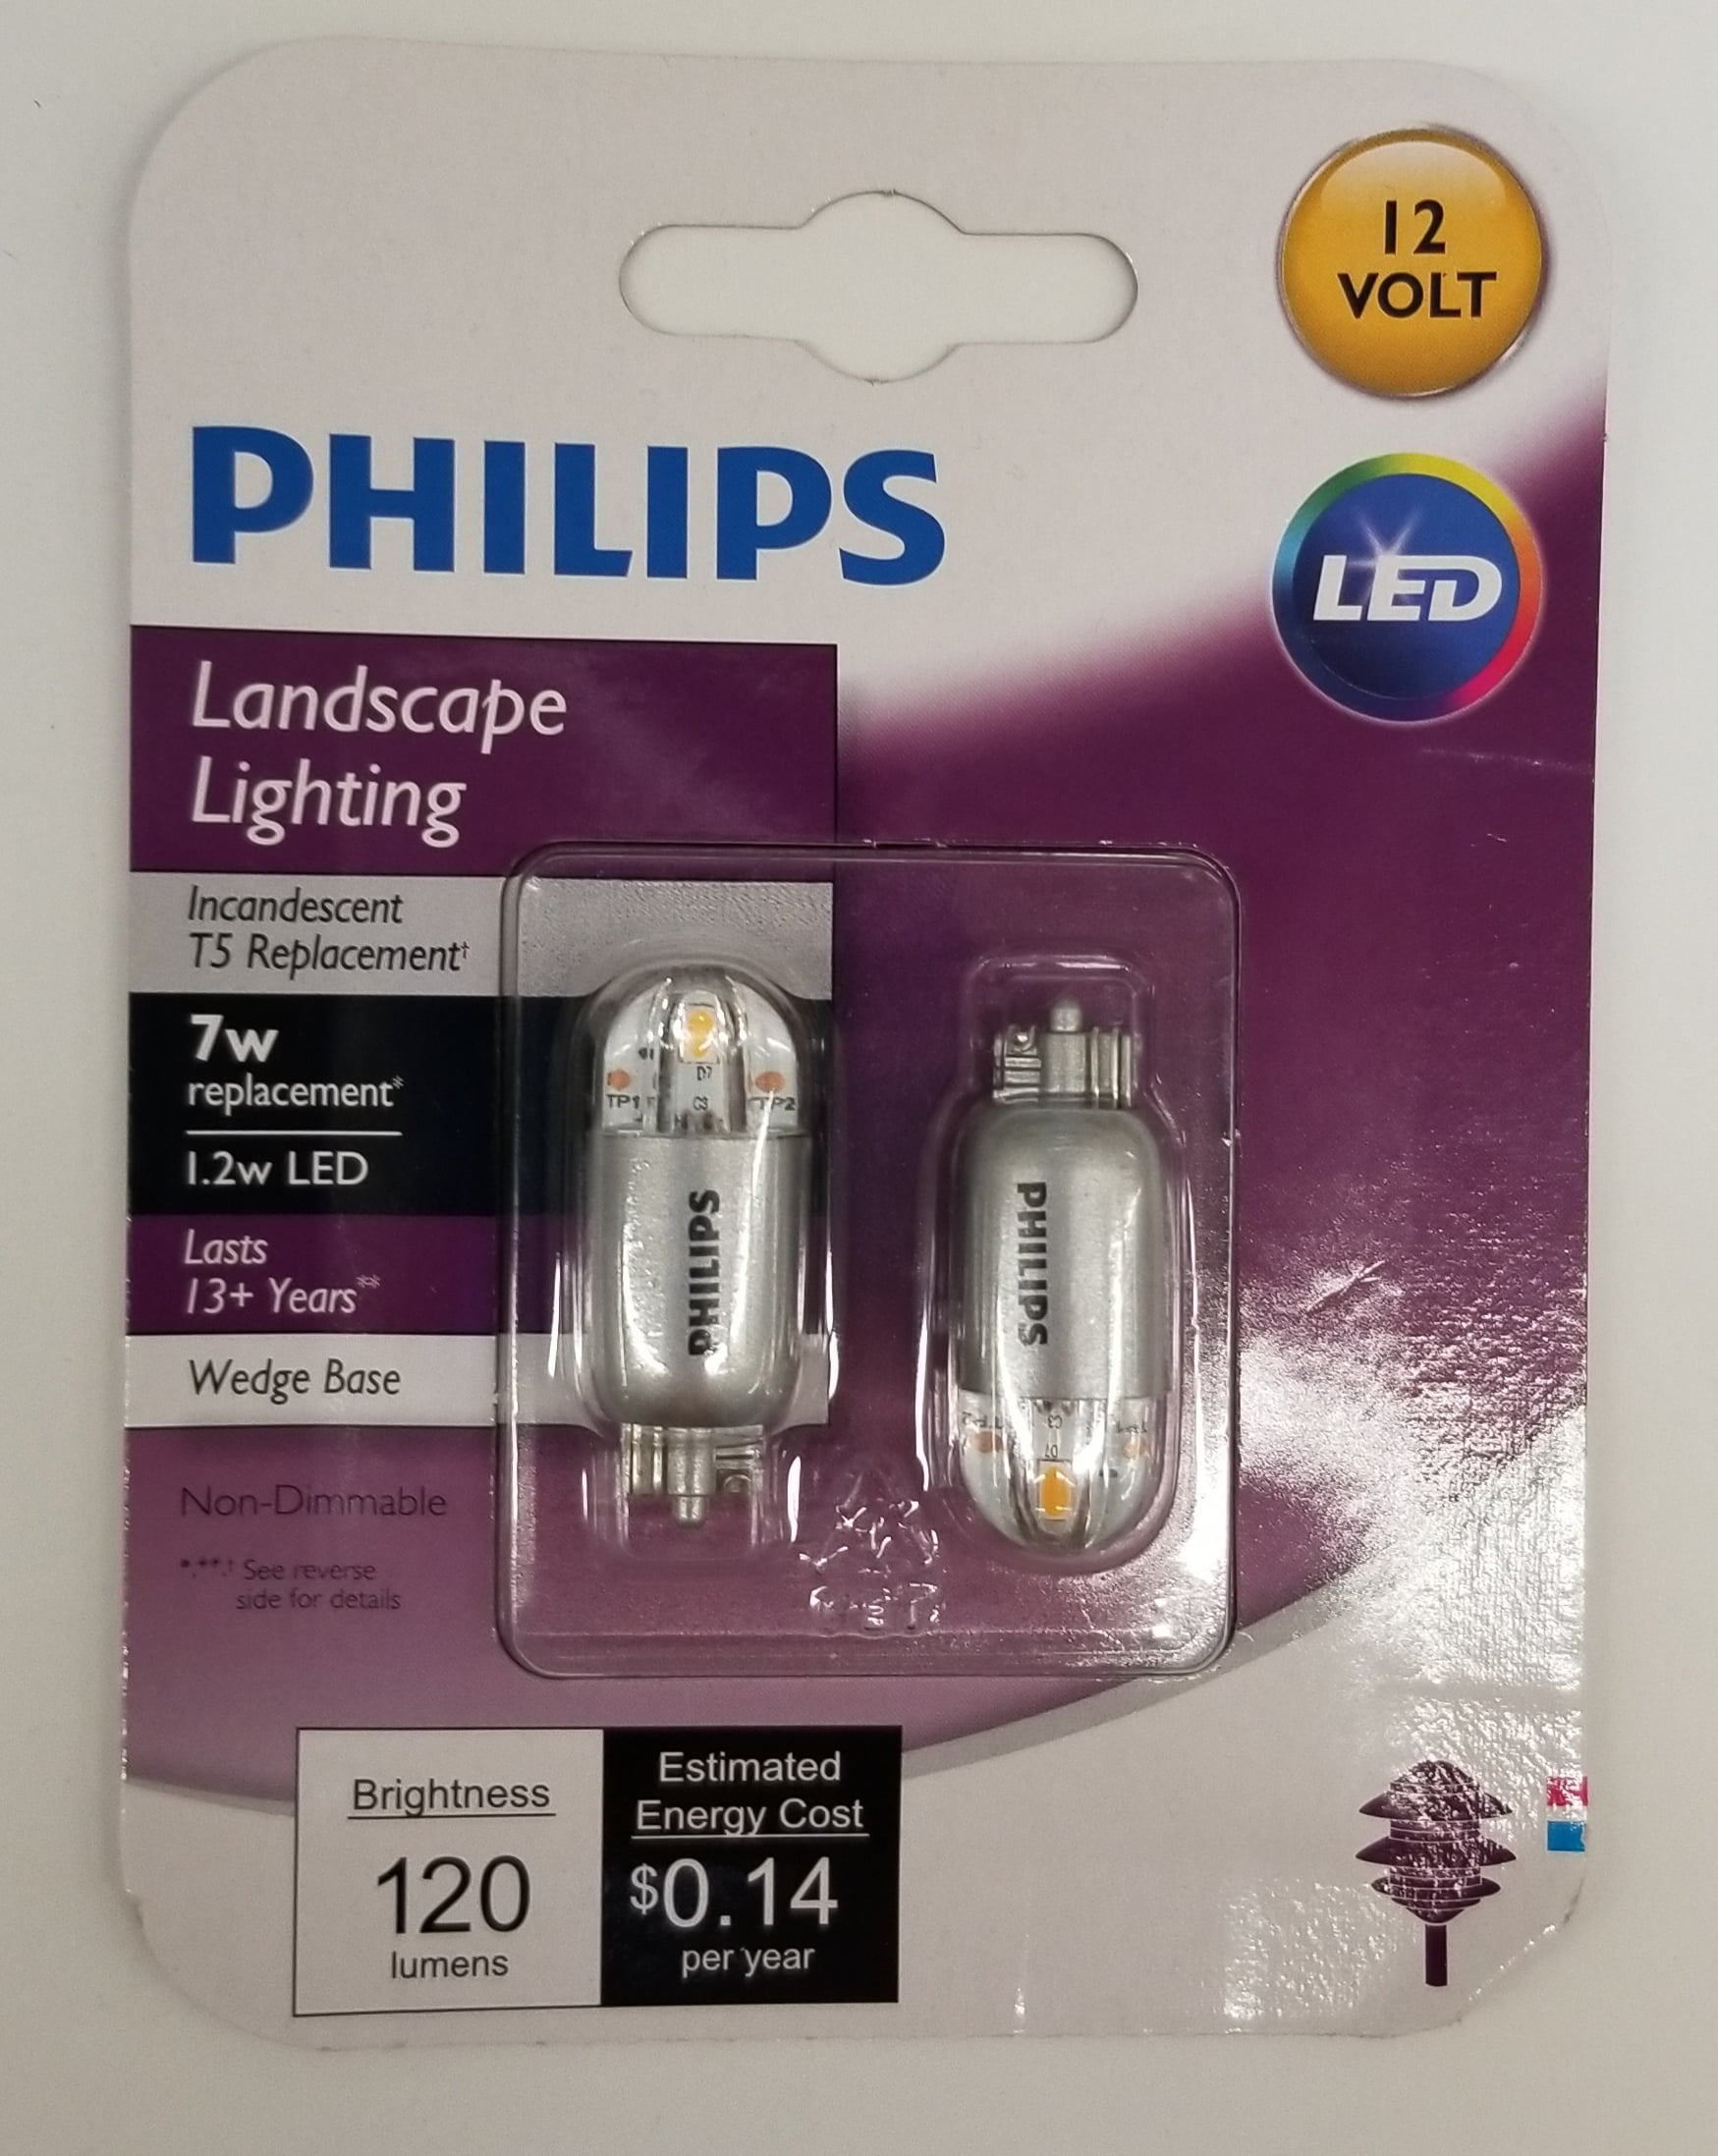 Phillips Led 7 Watt Light Bulb T5 Plc, T5 Led Landscape Bulbs